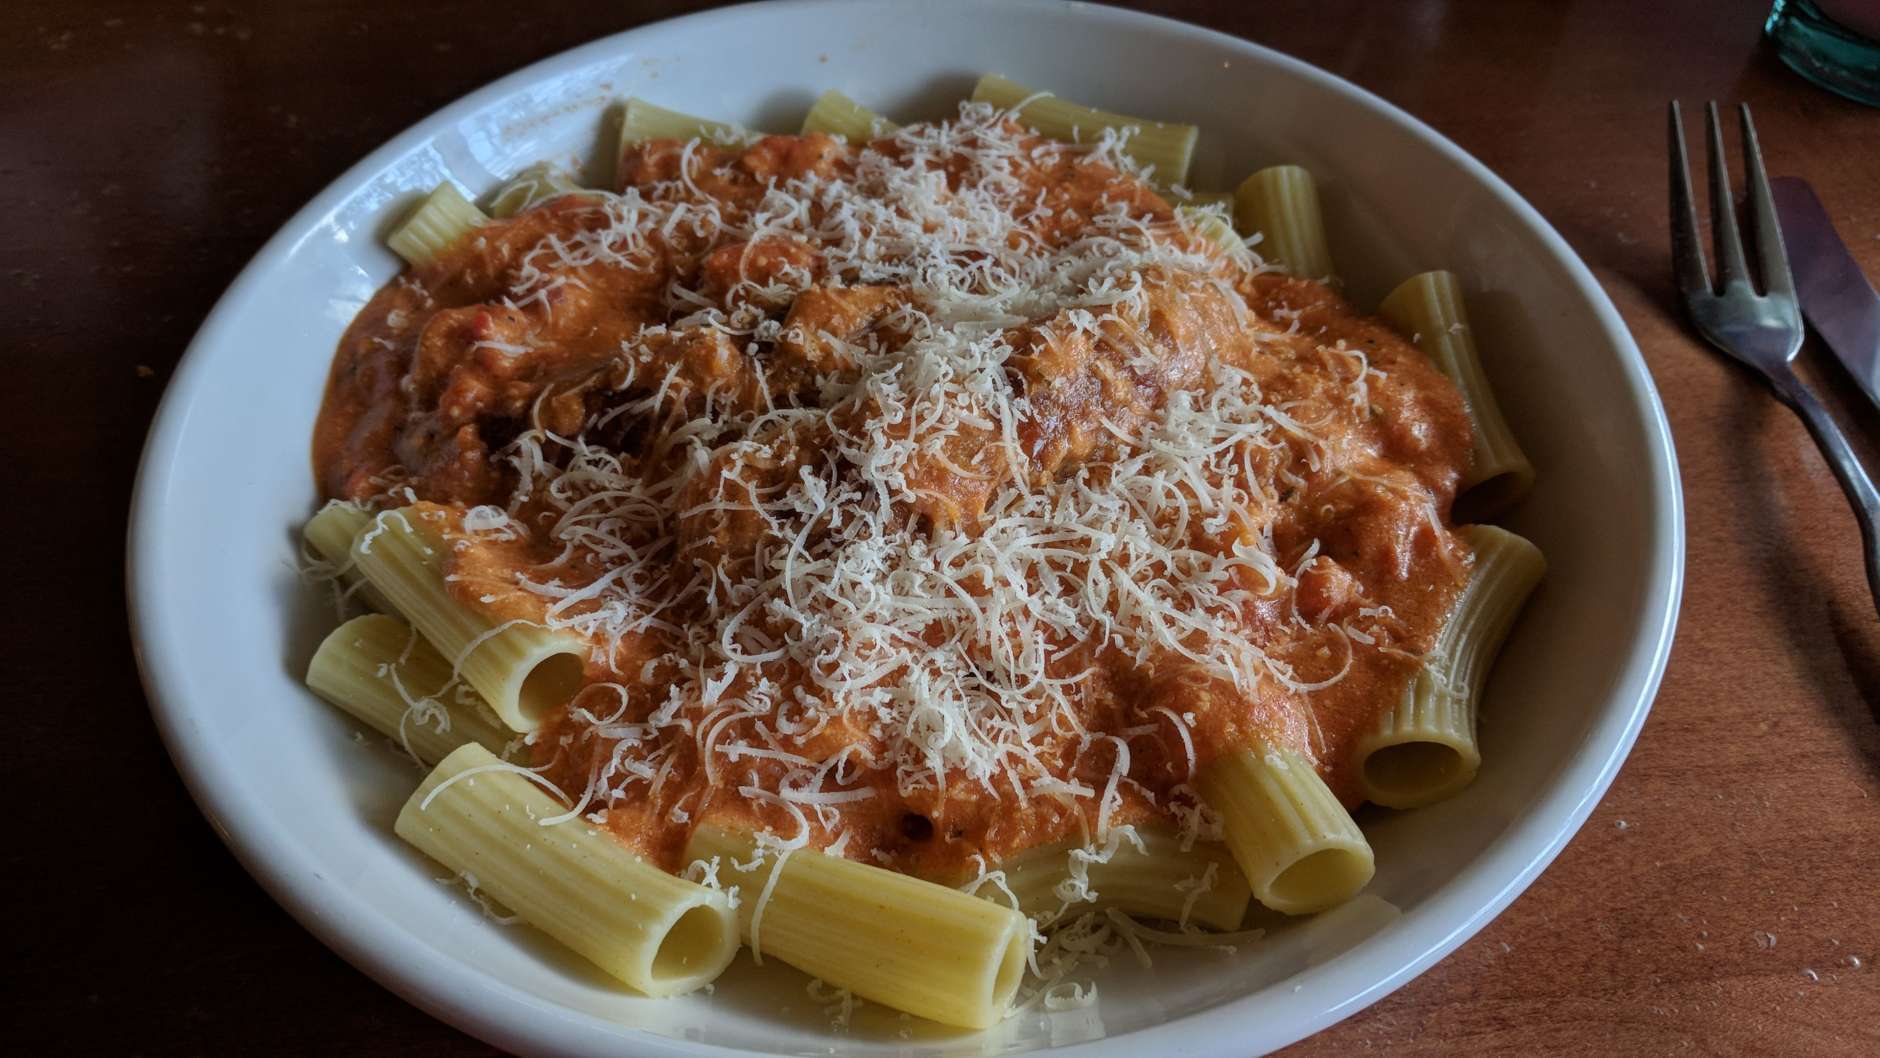 The meal: Rigatoni with five-cheese marinara and Italian sausage. (WTOP/Brandon Millman)